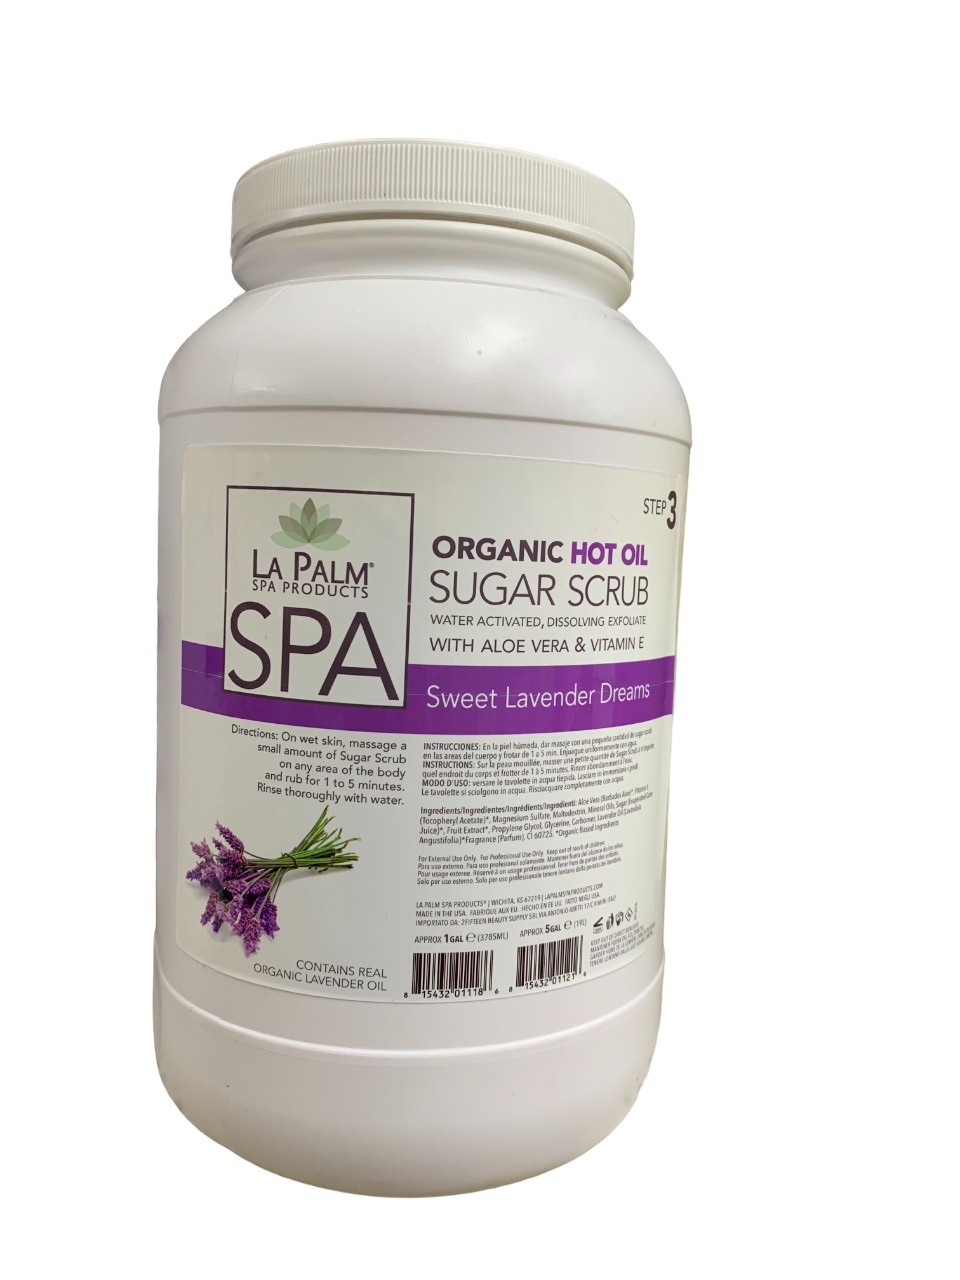 Lapalm Organic Hot Oil Sugar Scrub Sweet Lavender Dreams